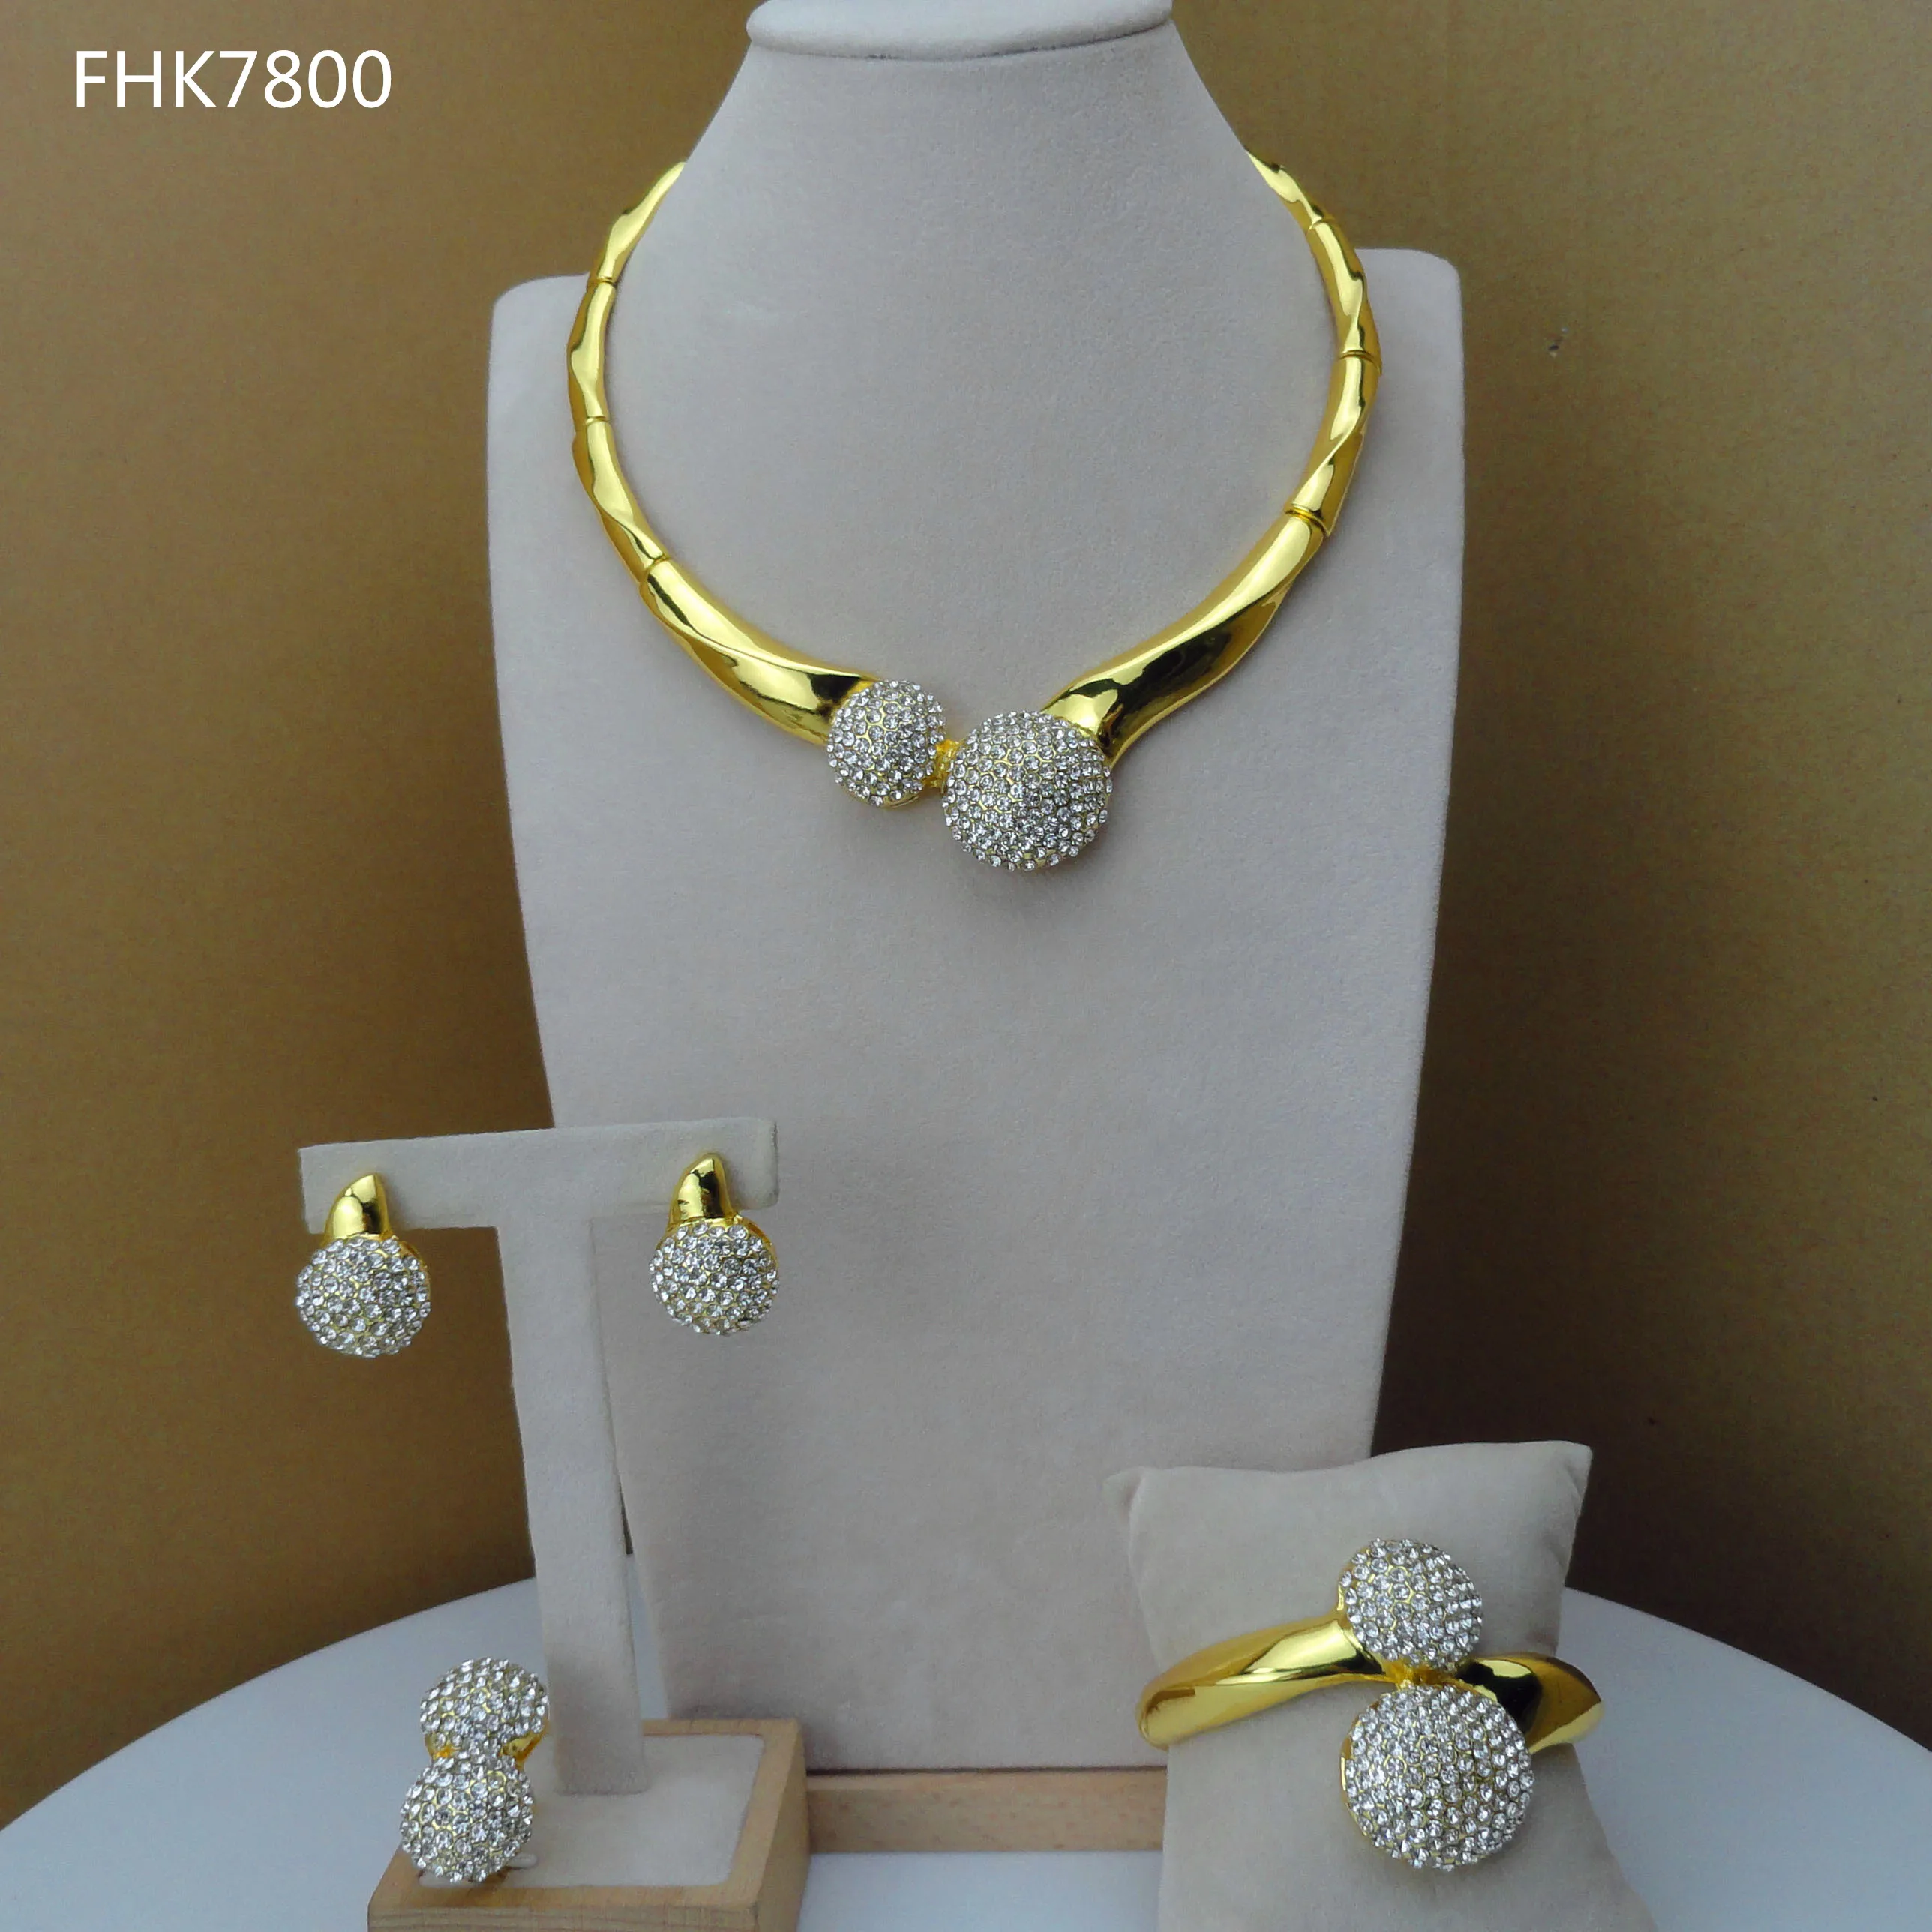  African Fashion Jewelry Sets Dubai Costume Jewelry Choker Necklace FHK7800 - £54.20 GBP